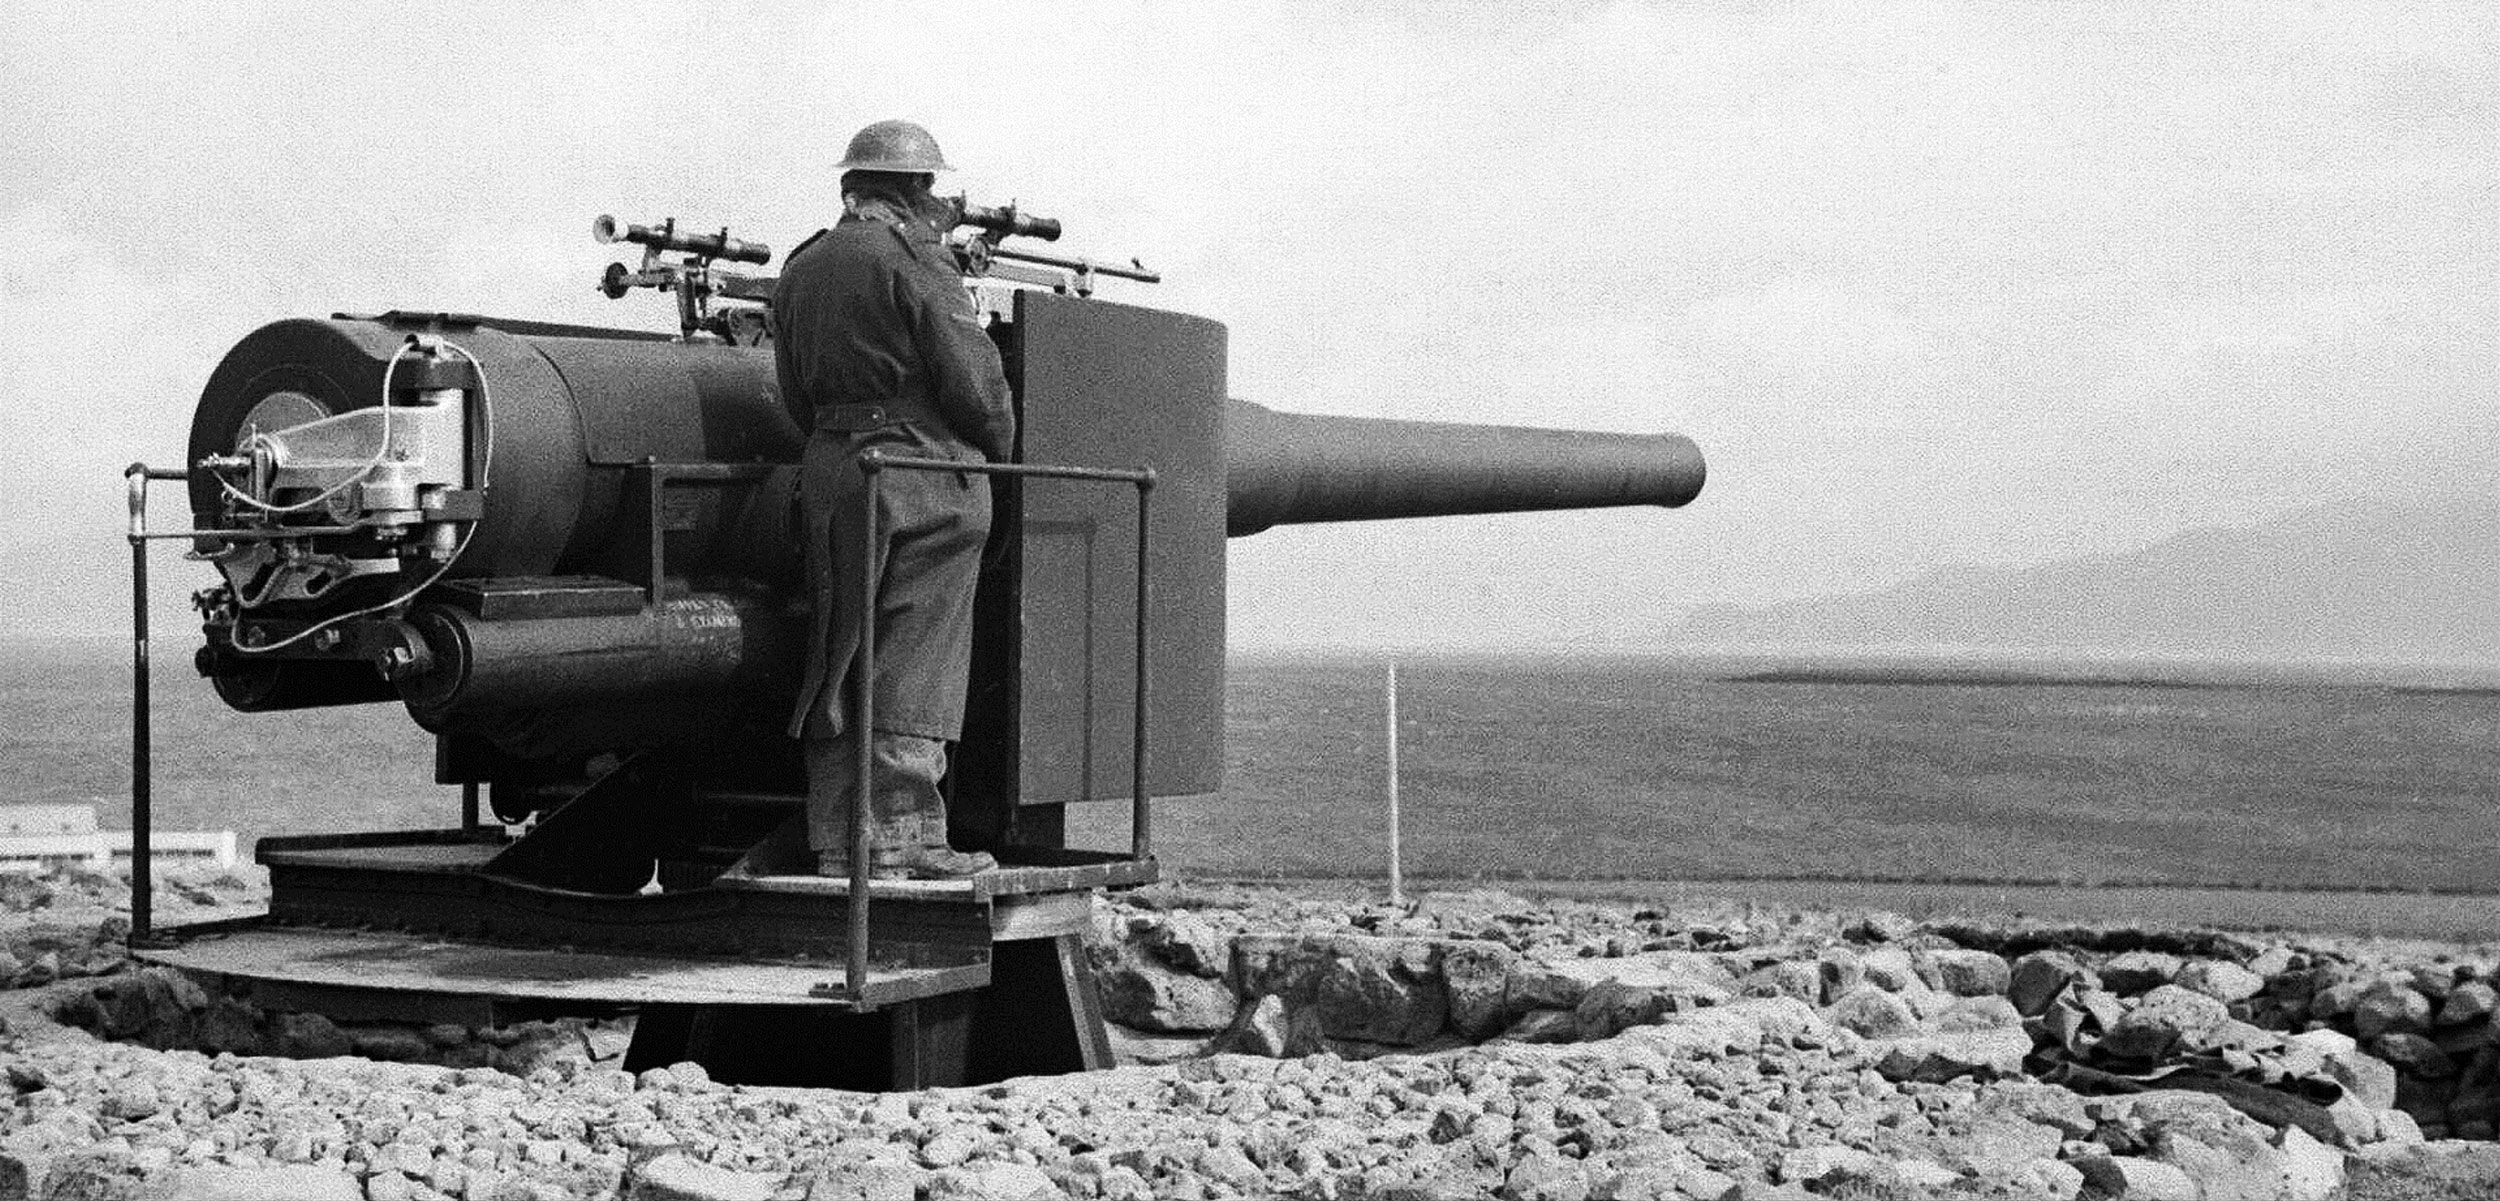 6-inch naval gun overlooking Reykjavik Bay in Iceland, 1940